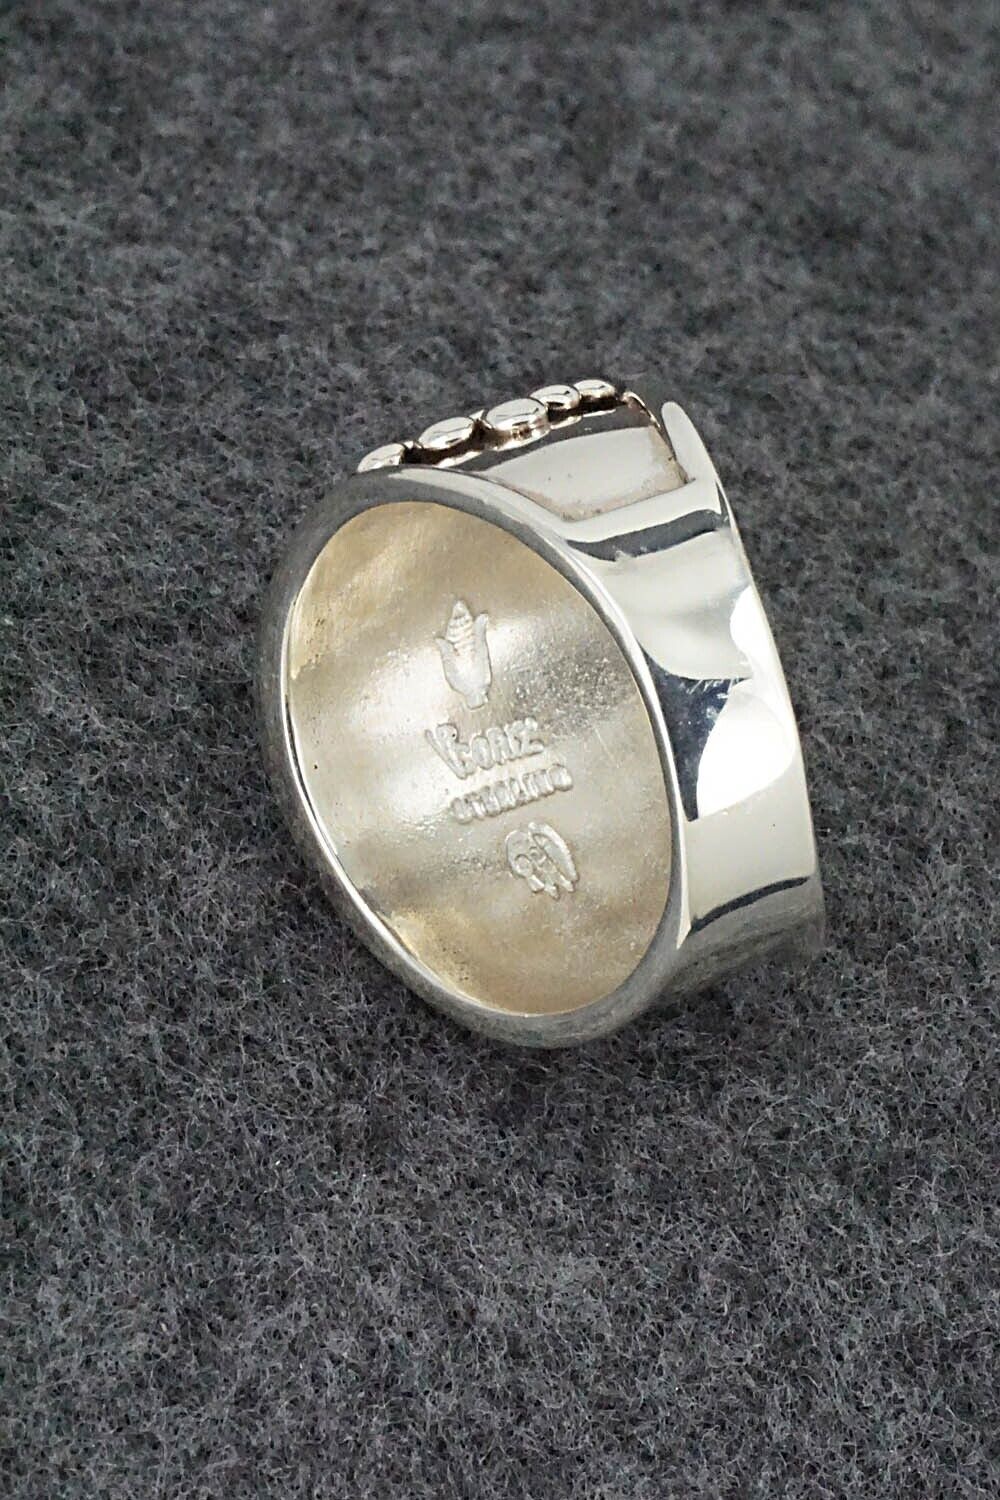 Sterling Silver Ring - Raymond Coriz - Size 10.5